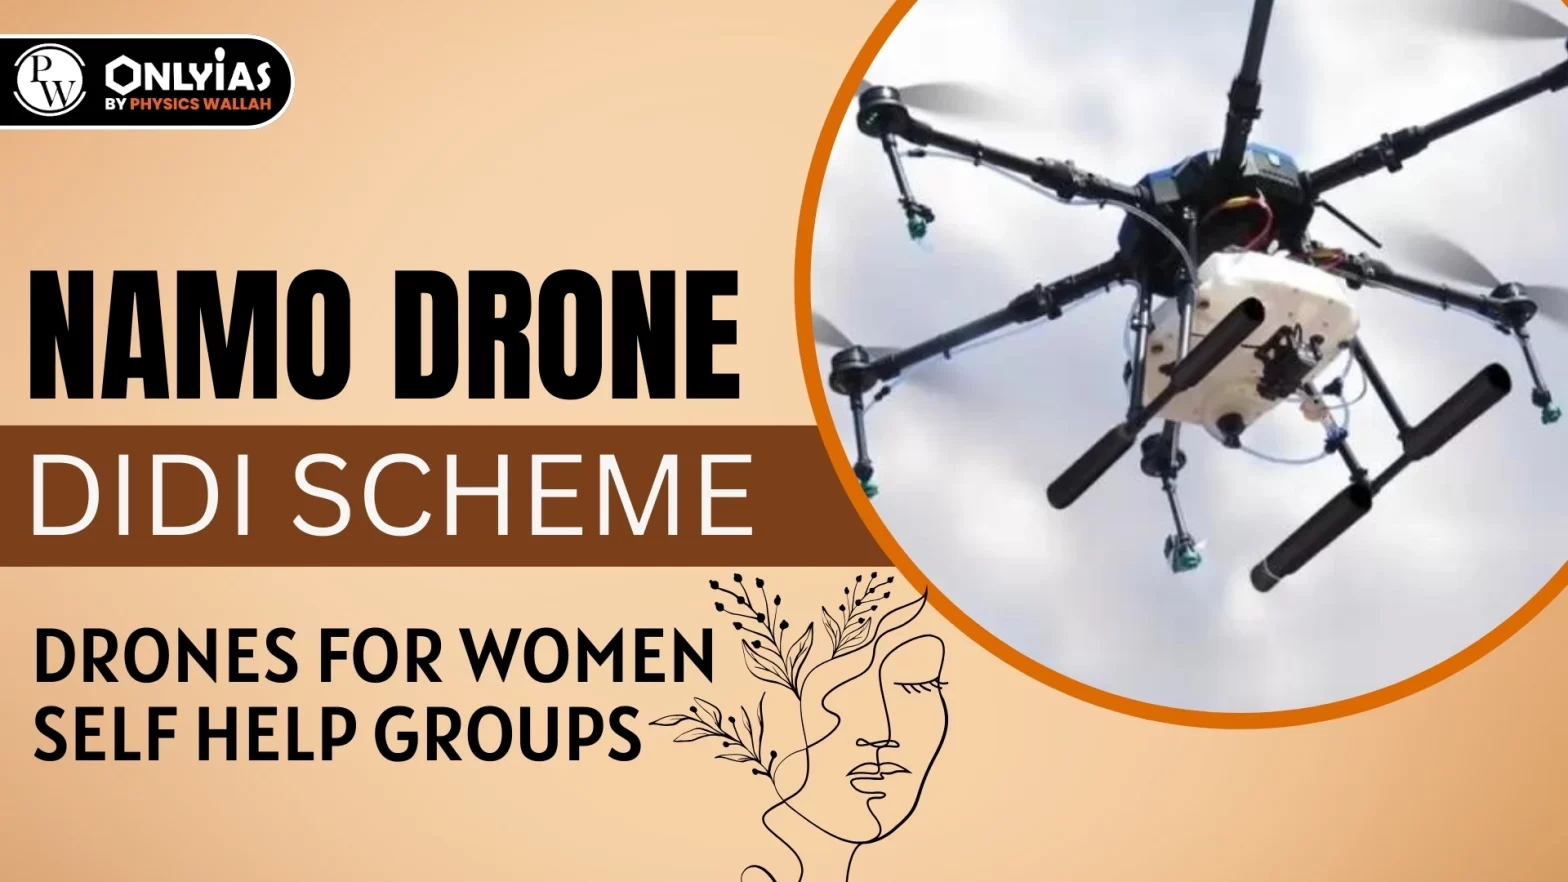 NAMO Drone Didi Scheme: Drones For Women Self Help Groups